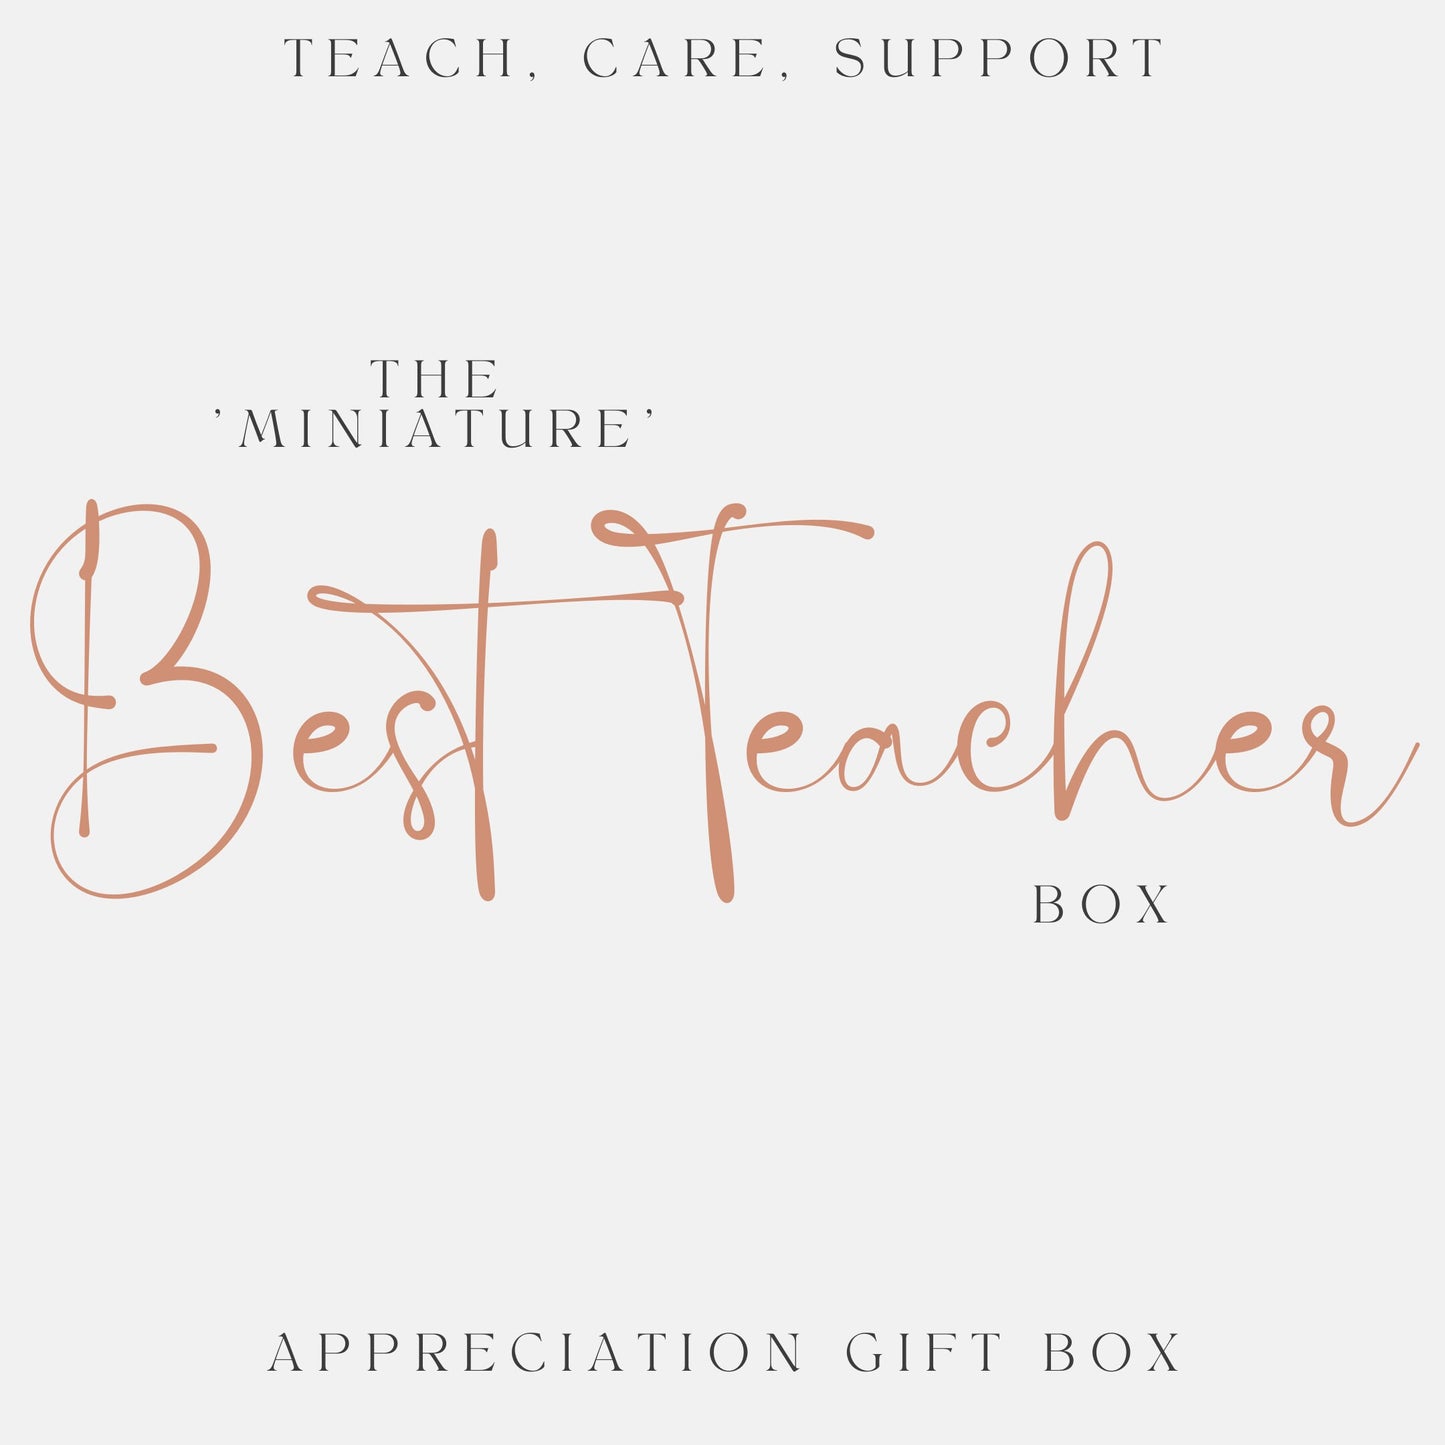 The Miniature Best Teacher Box - Letterbox Gift